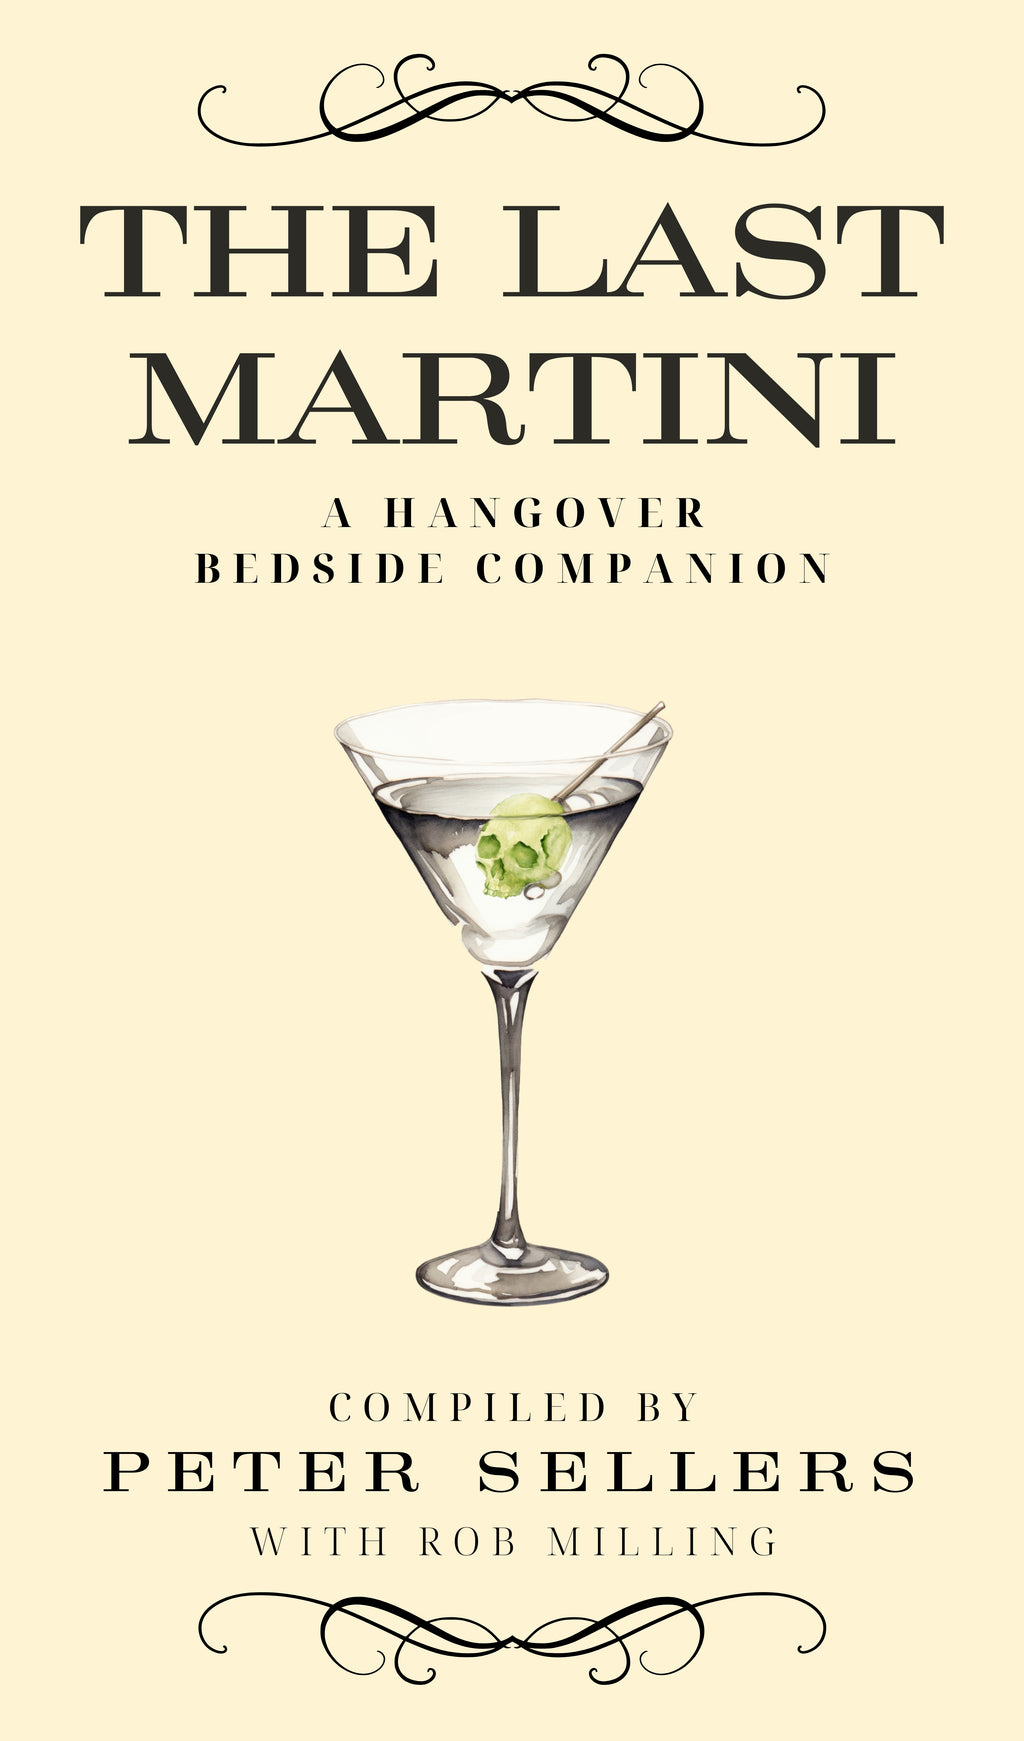 The Last Martini: A Hangover Bedside Companion